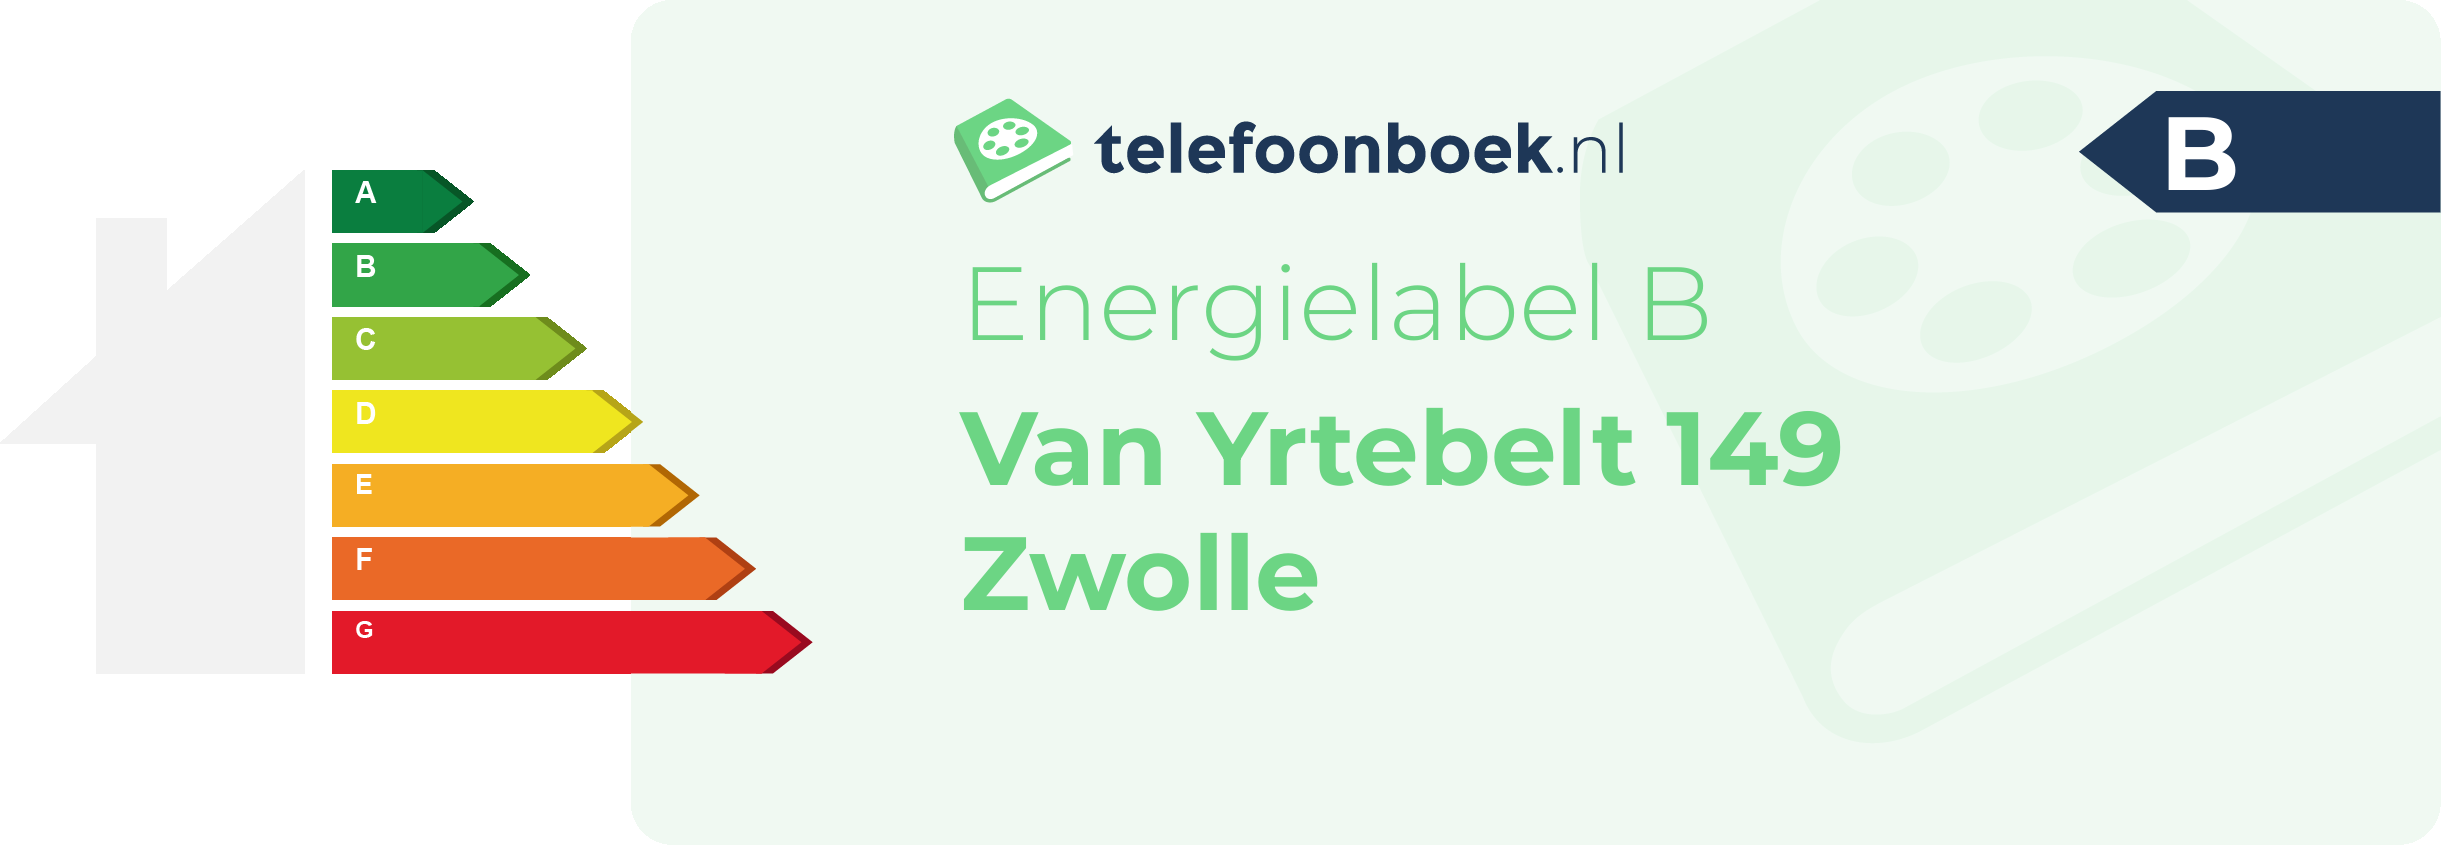 Energielabel Van Yrtebelt 149 Zwolle